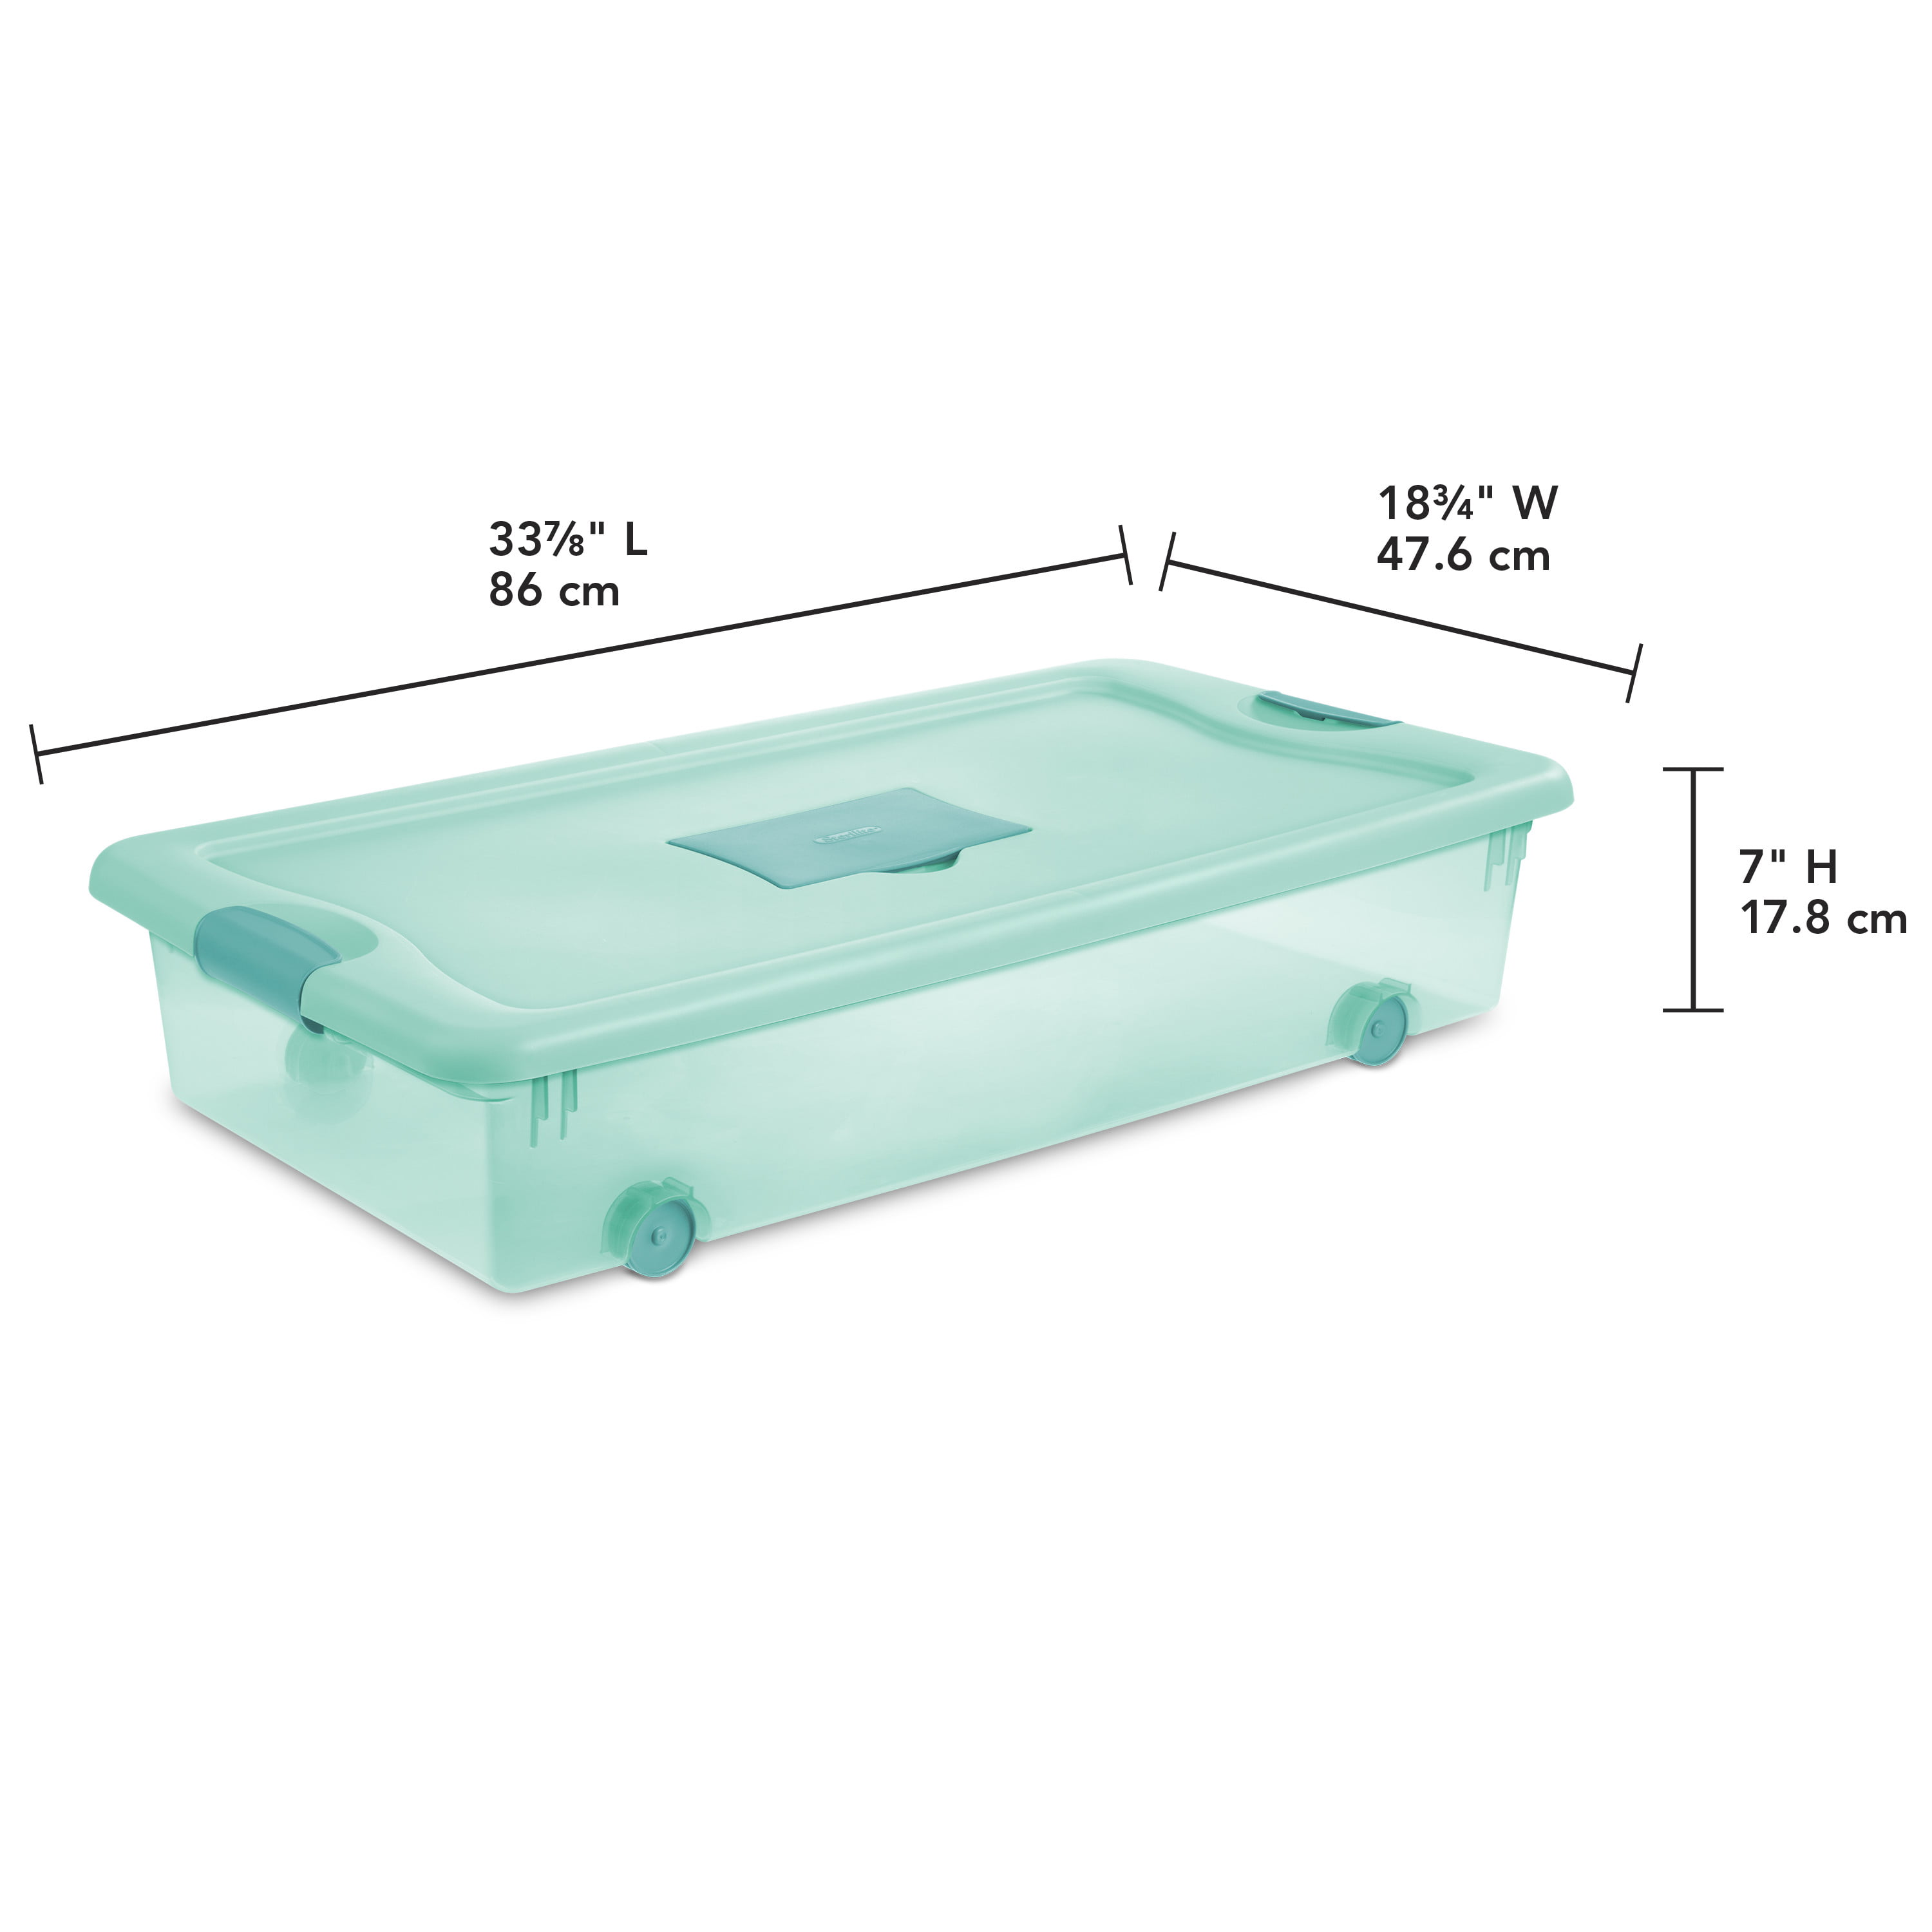 Sterilite Aqua Slate 56-Quart Underbed Latching Storage Box with Wheels